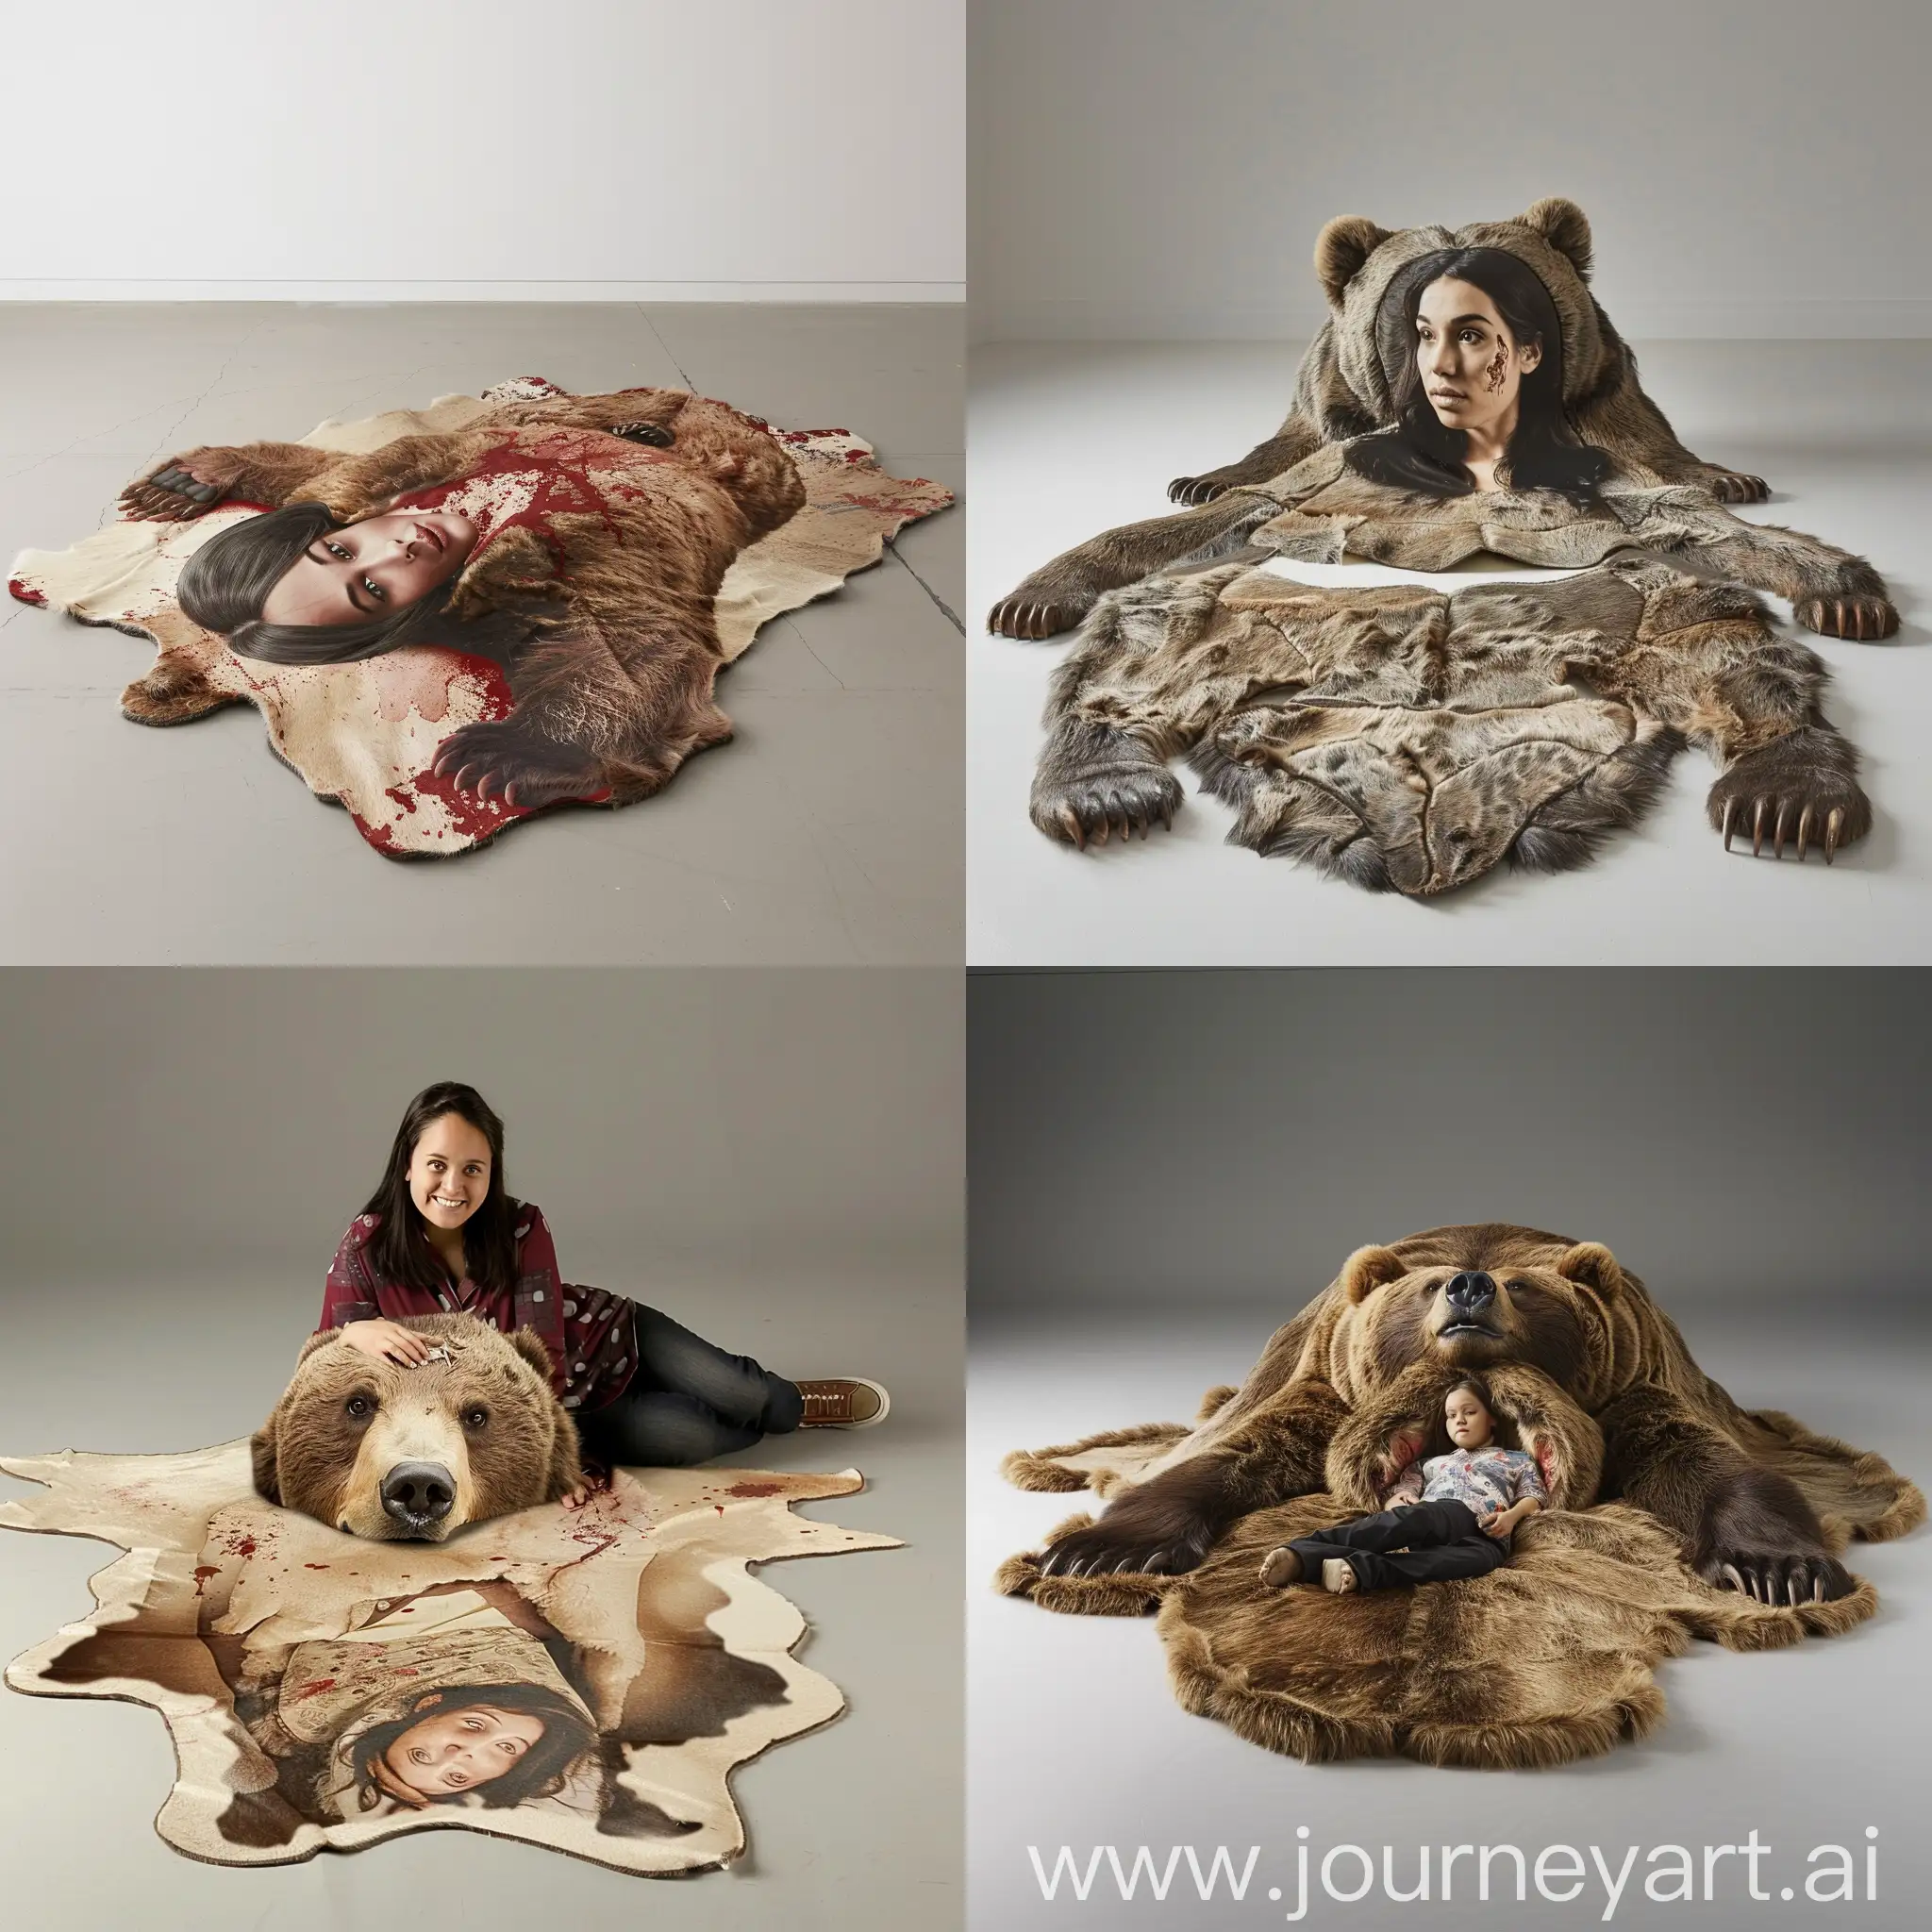 Surreal-Human-Woman-Bear-Skin-Rug-Art